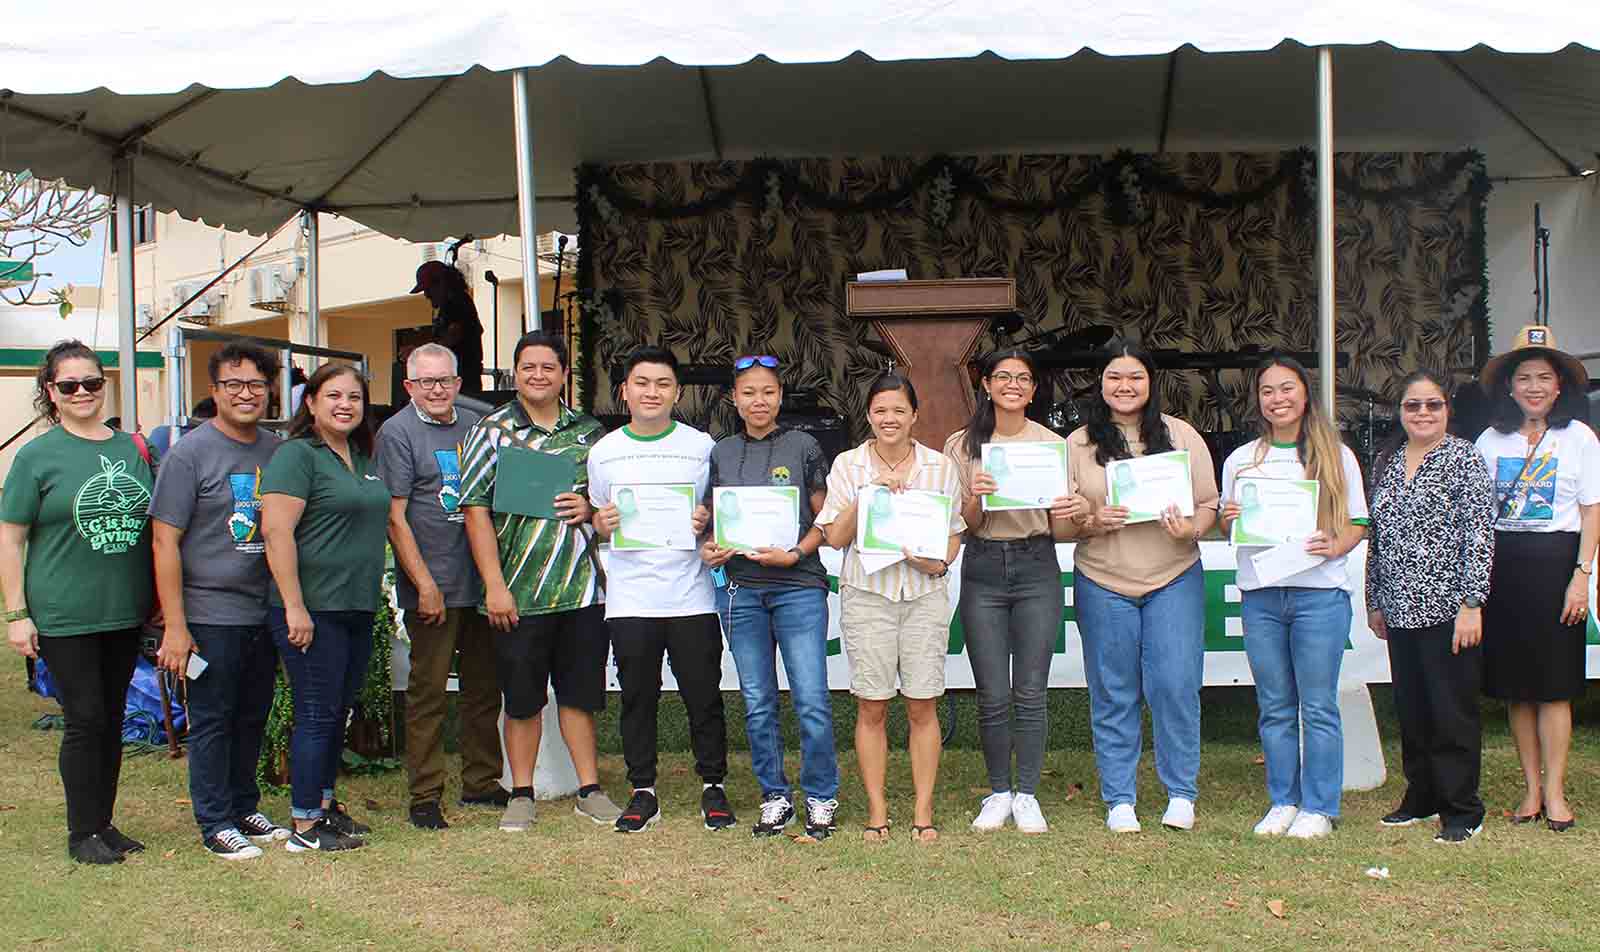 Bernard Watson scholarship recipients pose with their certificates